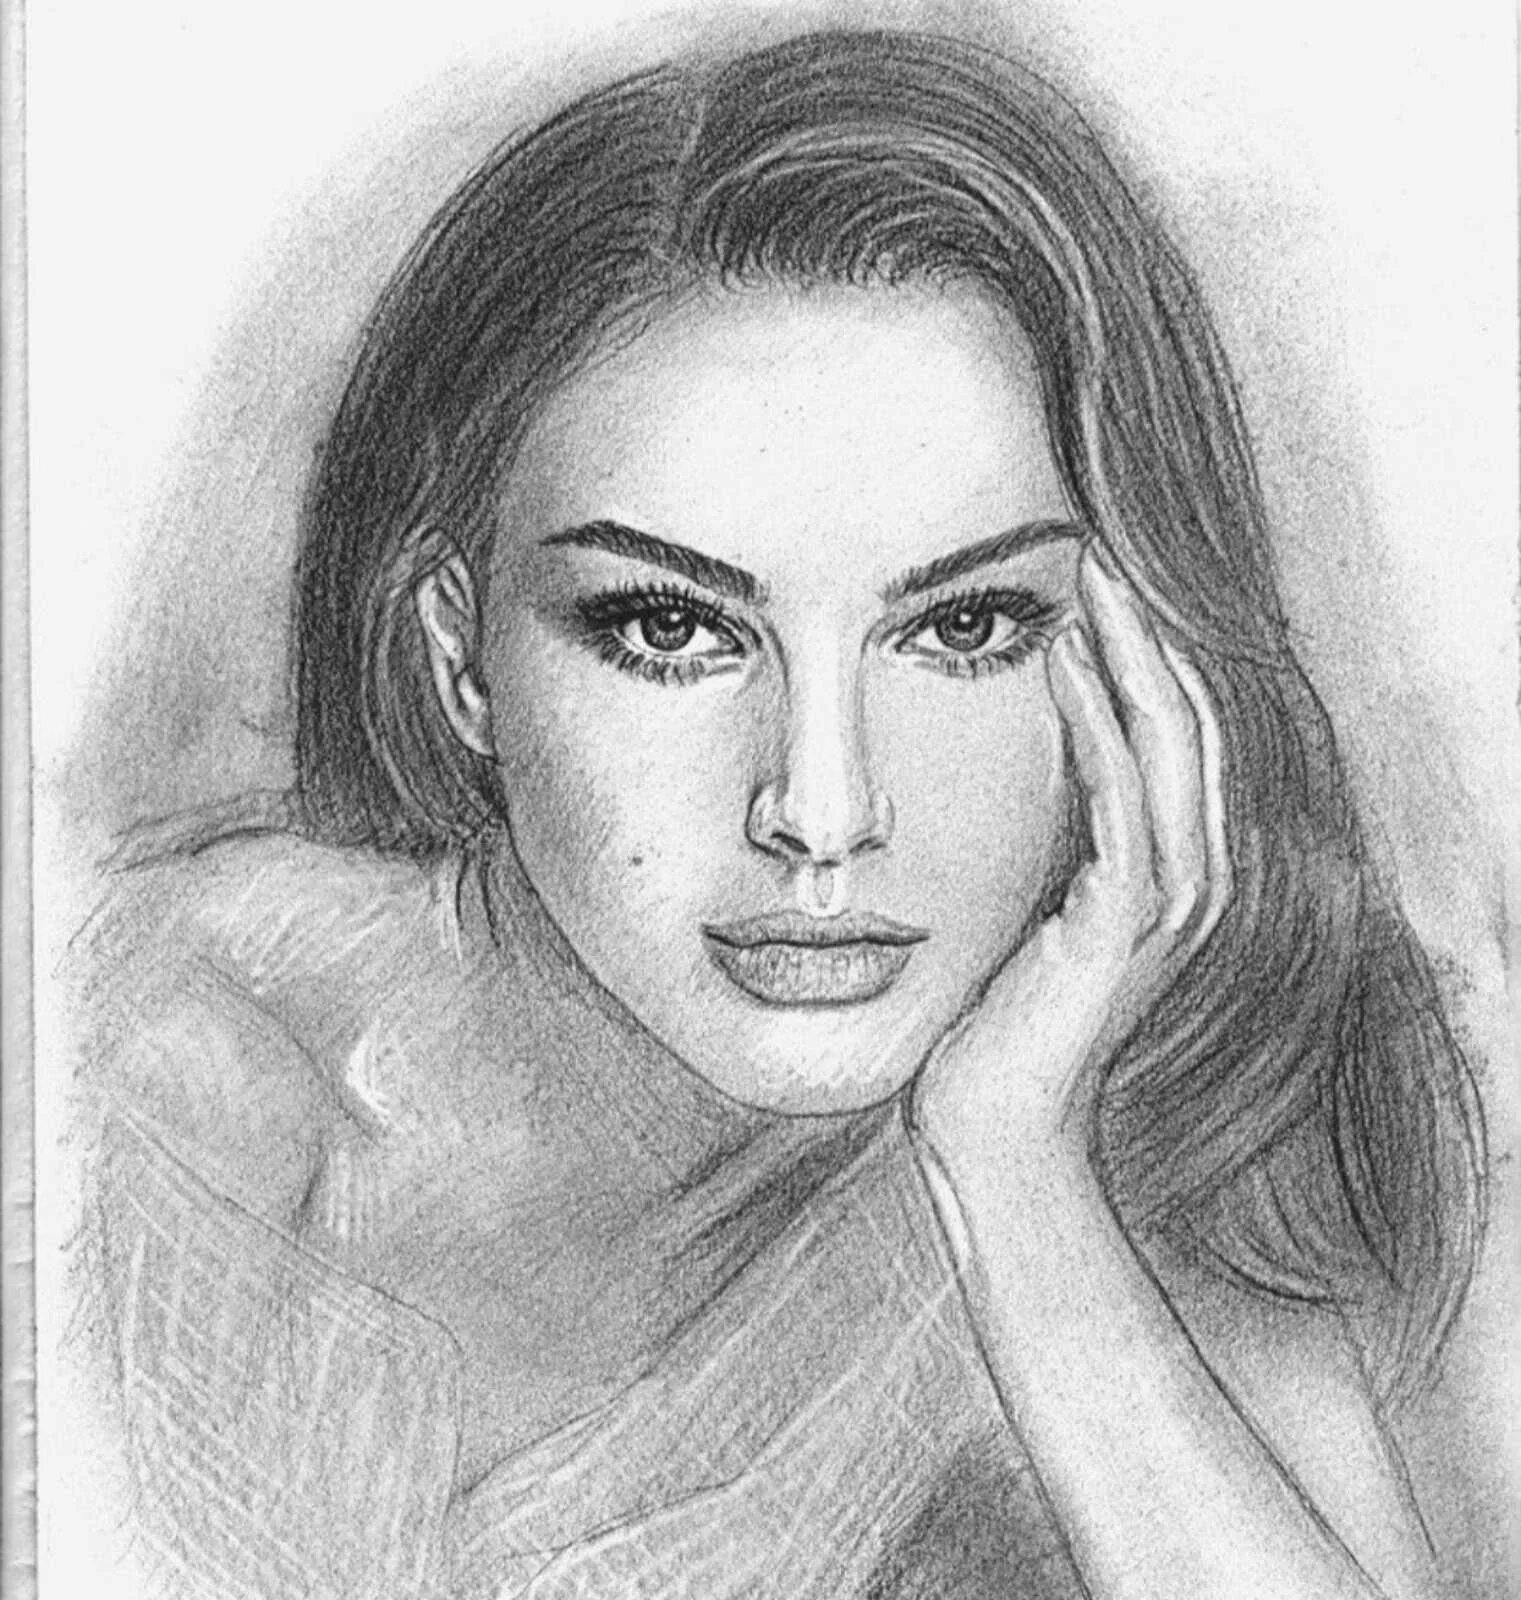 Картинка женщина карандашом. Натали Портман портрет карандашом. Срисовки портреты Натали Портман. Анджелина Джоли портрет. Натали Портман рисунок карандашом.